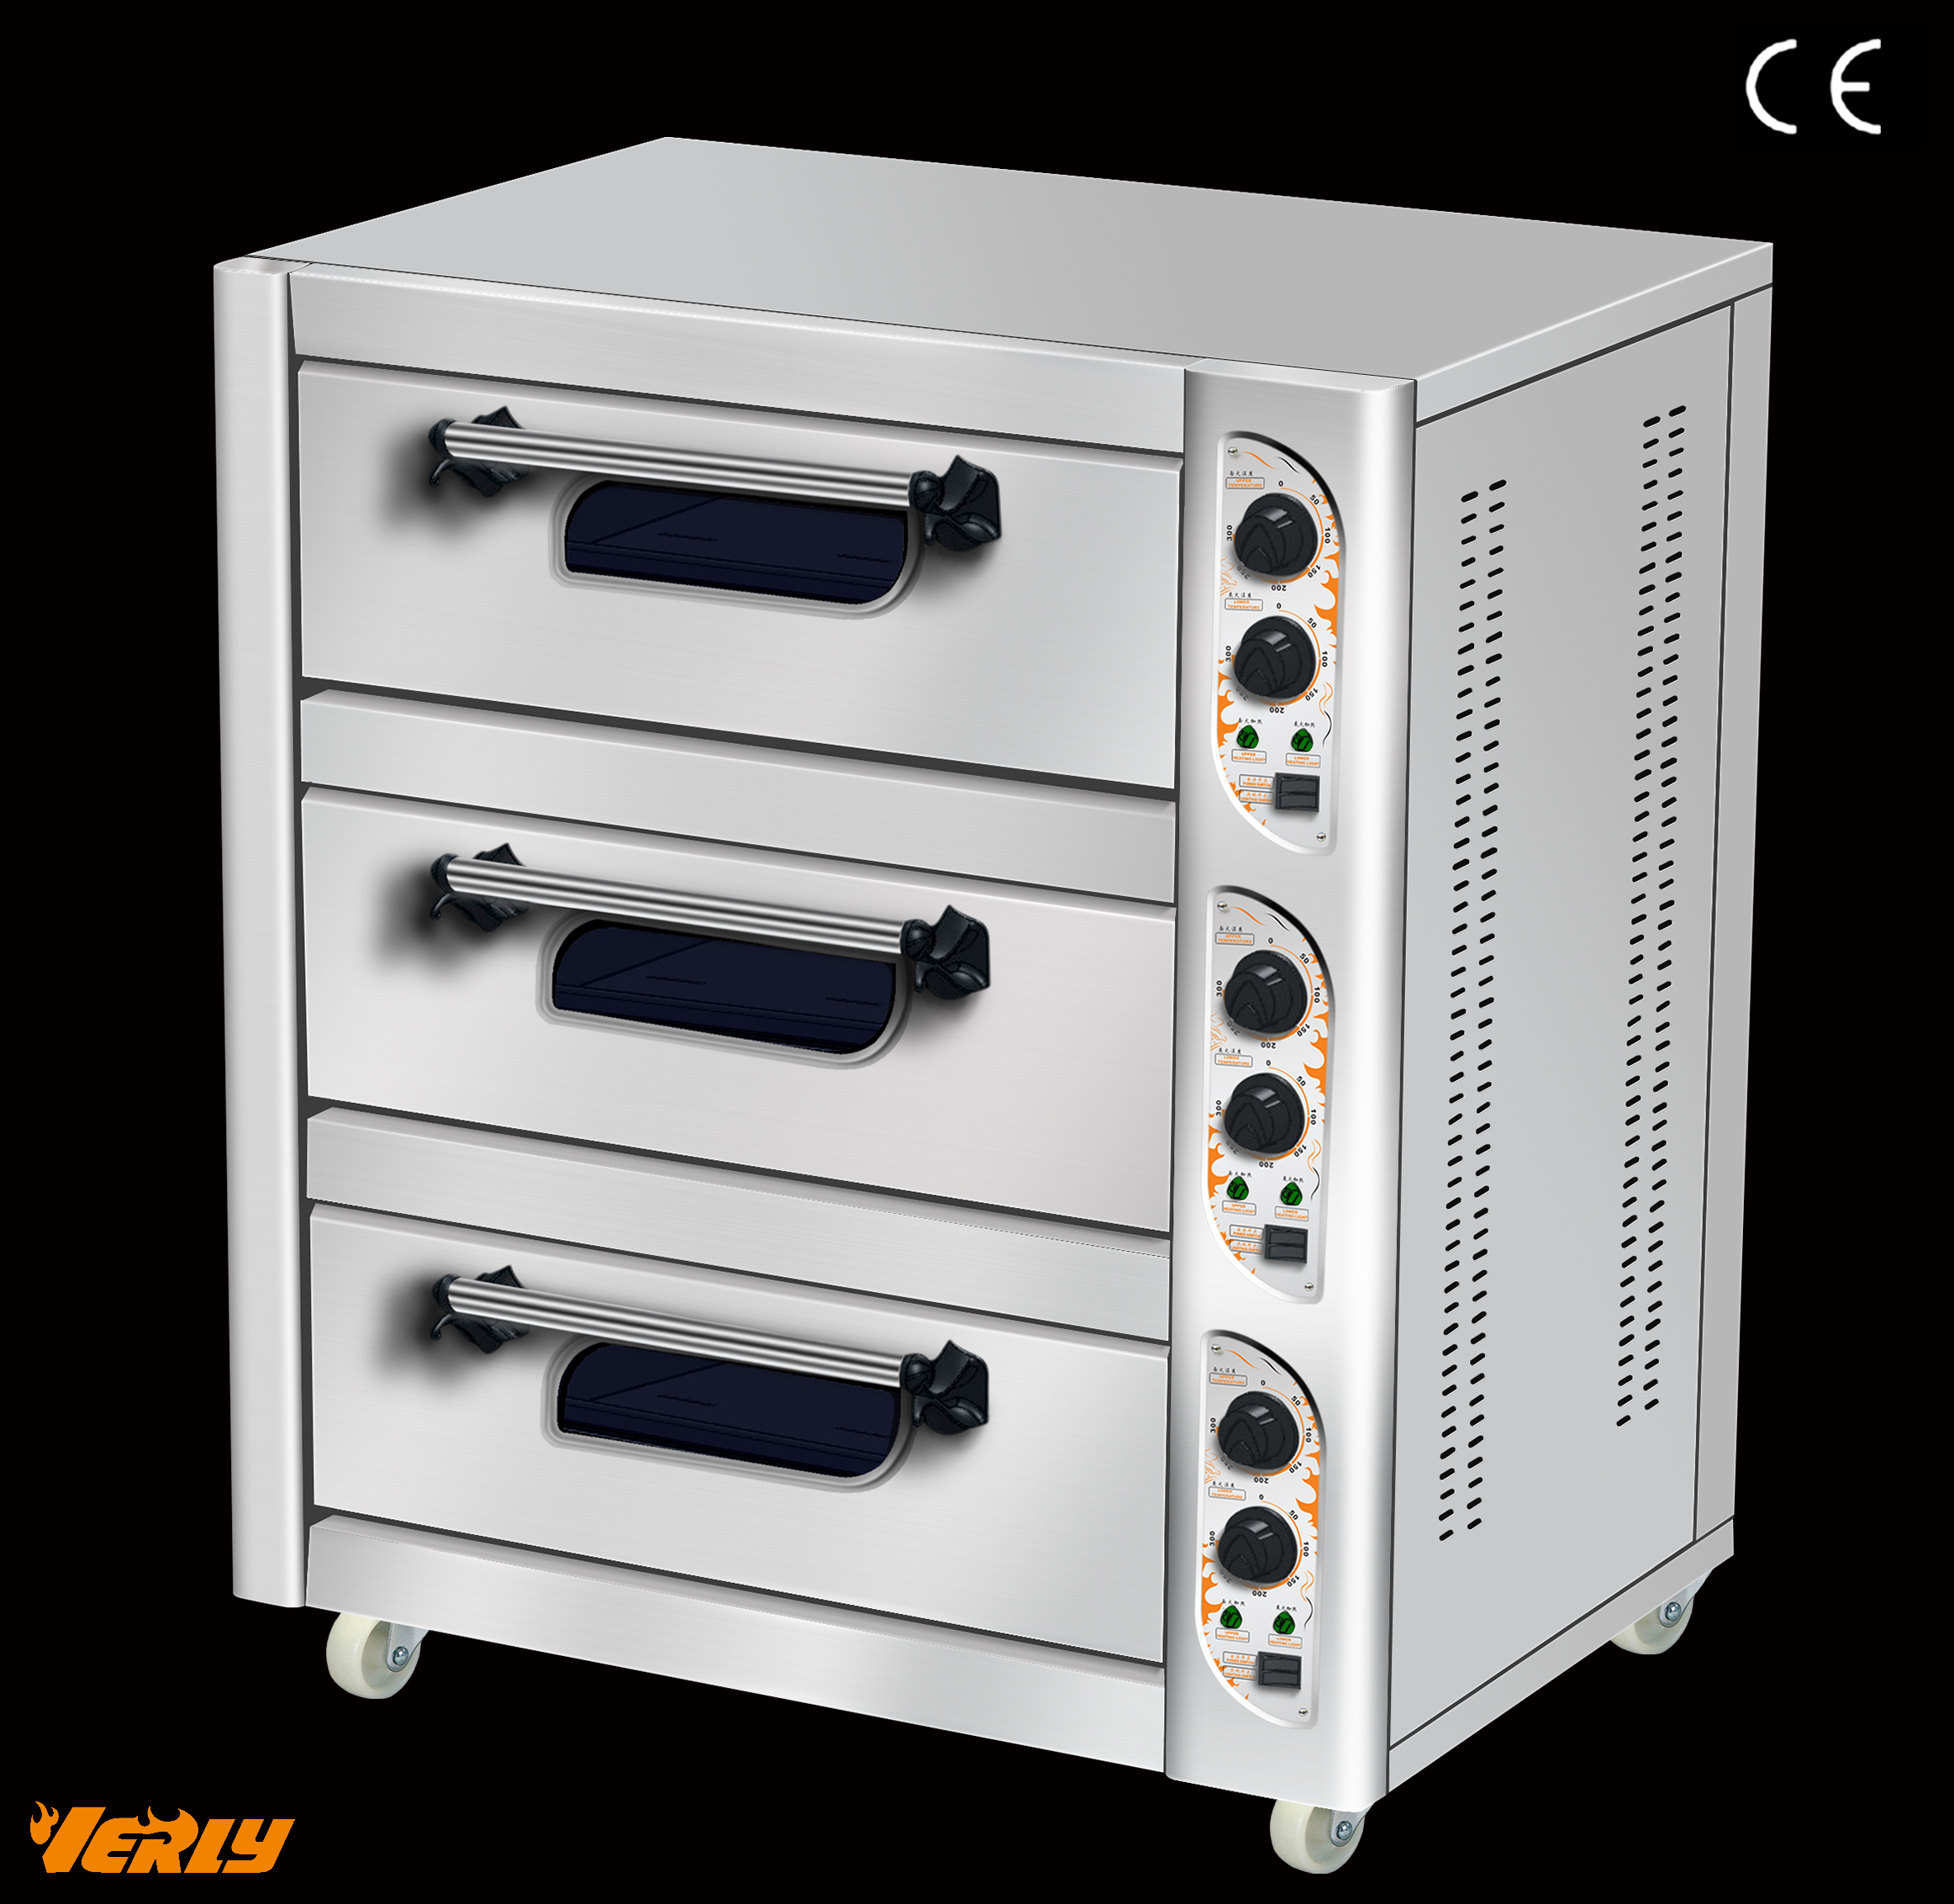 VERLY 汇利VH-33电烤炉电烤箱电烘炉精准温控 三层三盘电烘炉